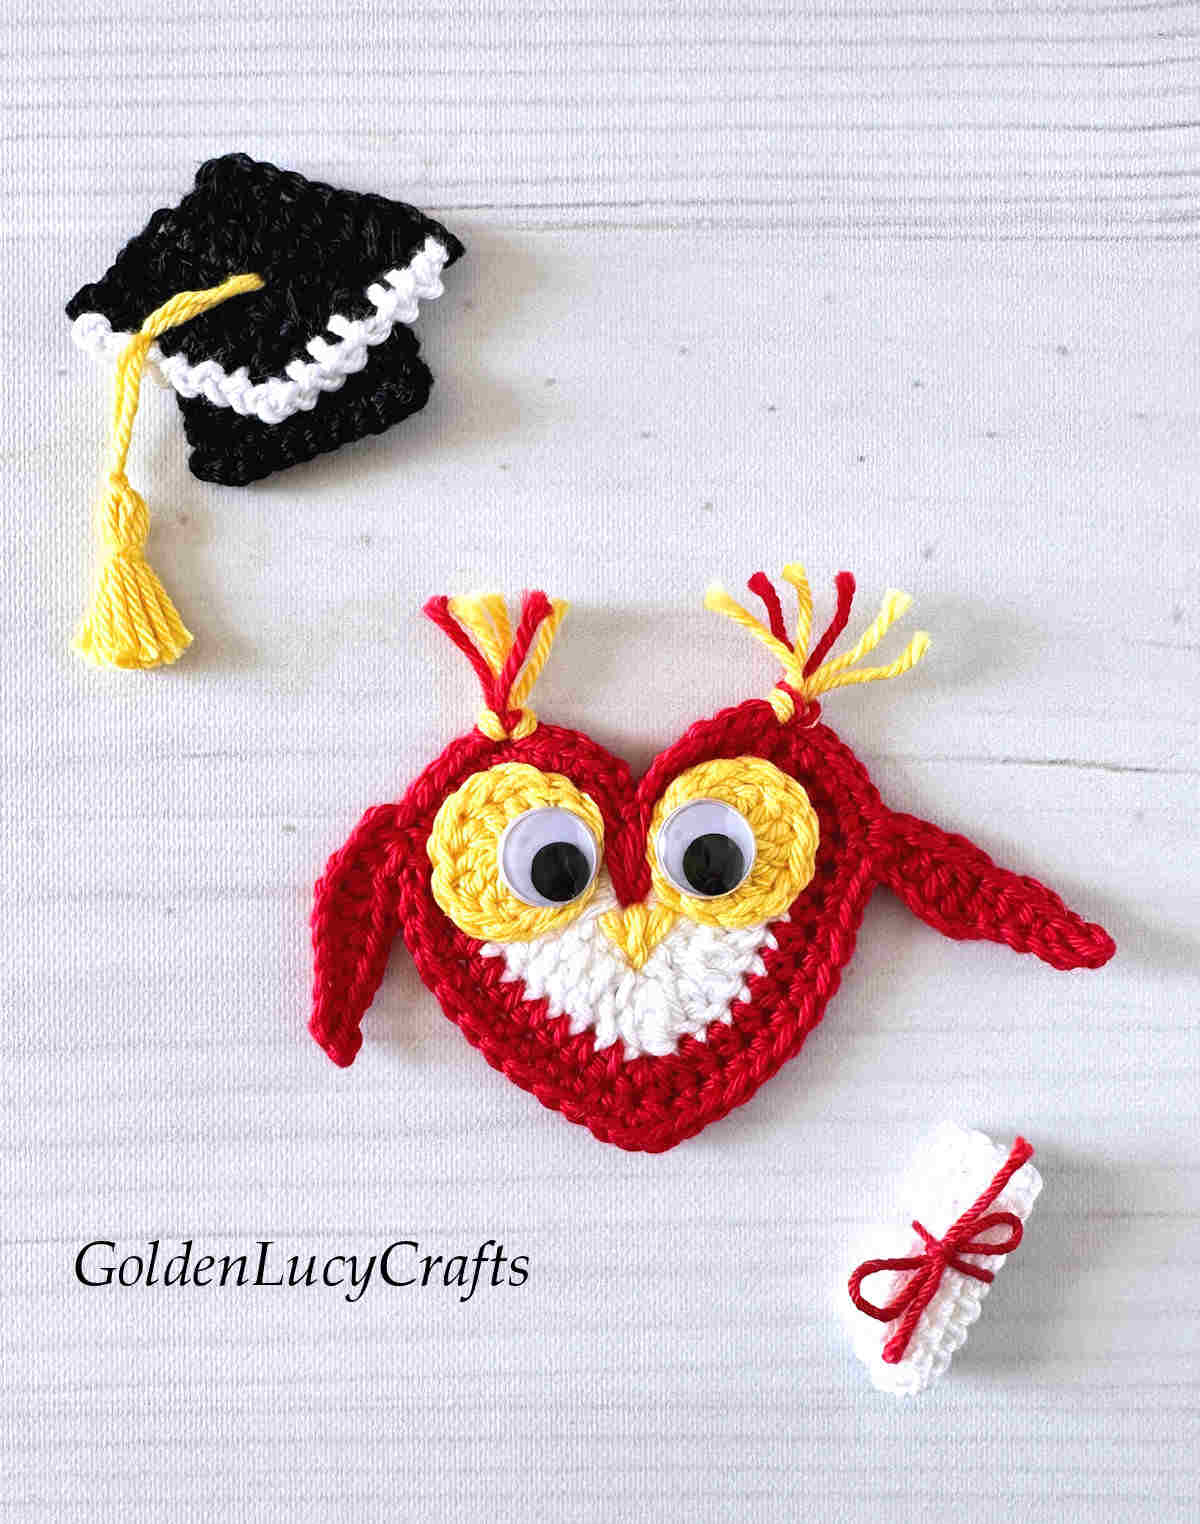 Crocheted graduation cap, owl and diploma appliques.